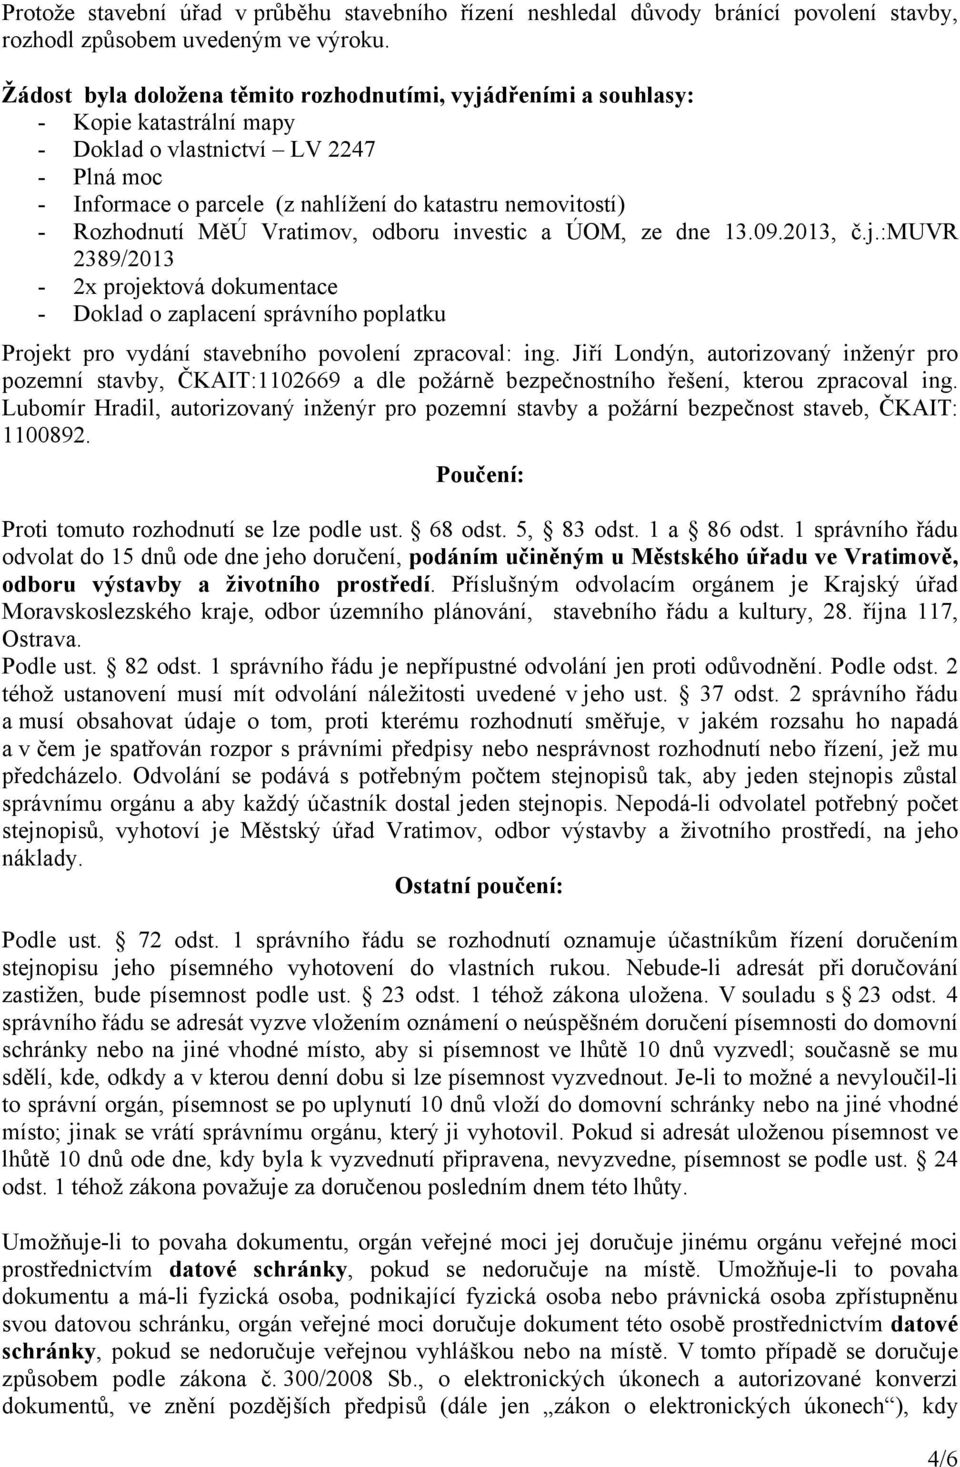 Rozhodnutí MěÚ Vratimov, odboru investic a ÚOM, ze dne 13.09.2013, č.j.